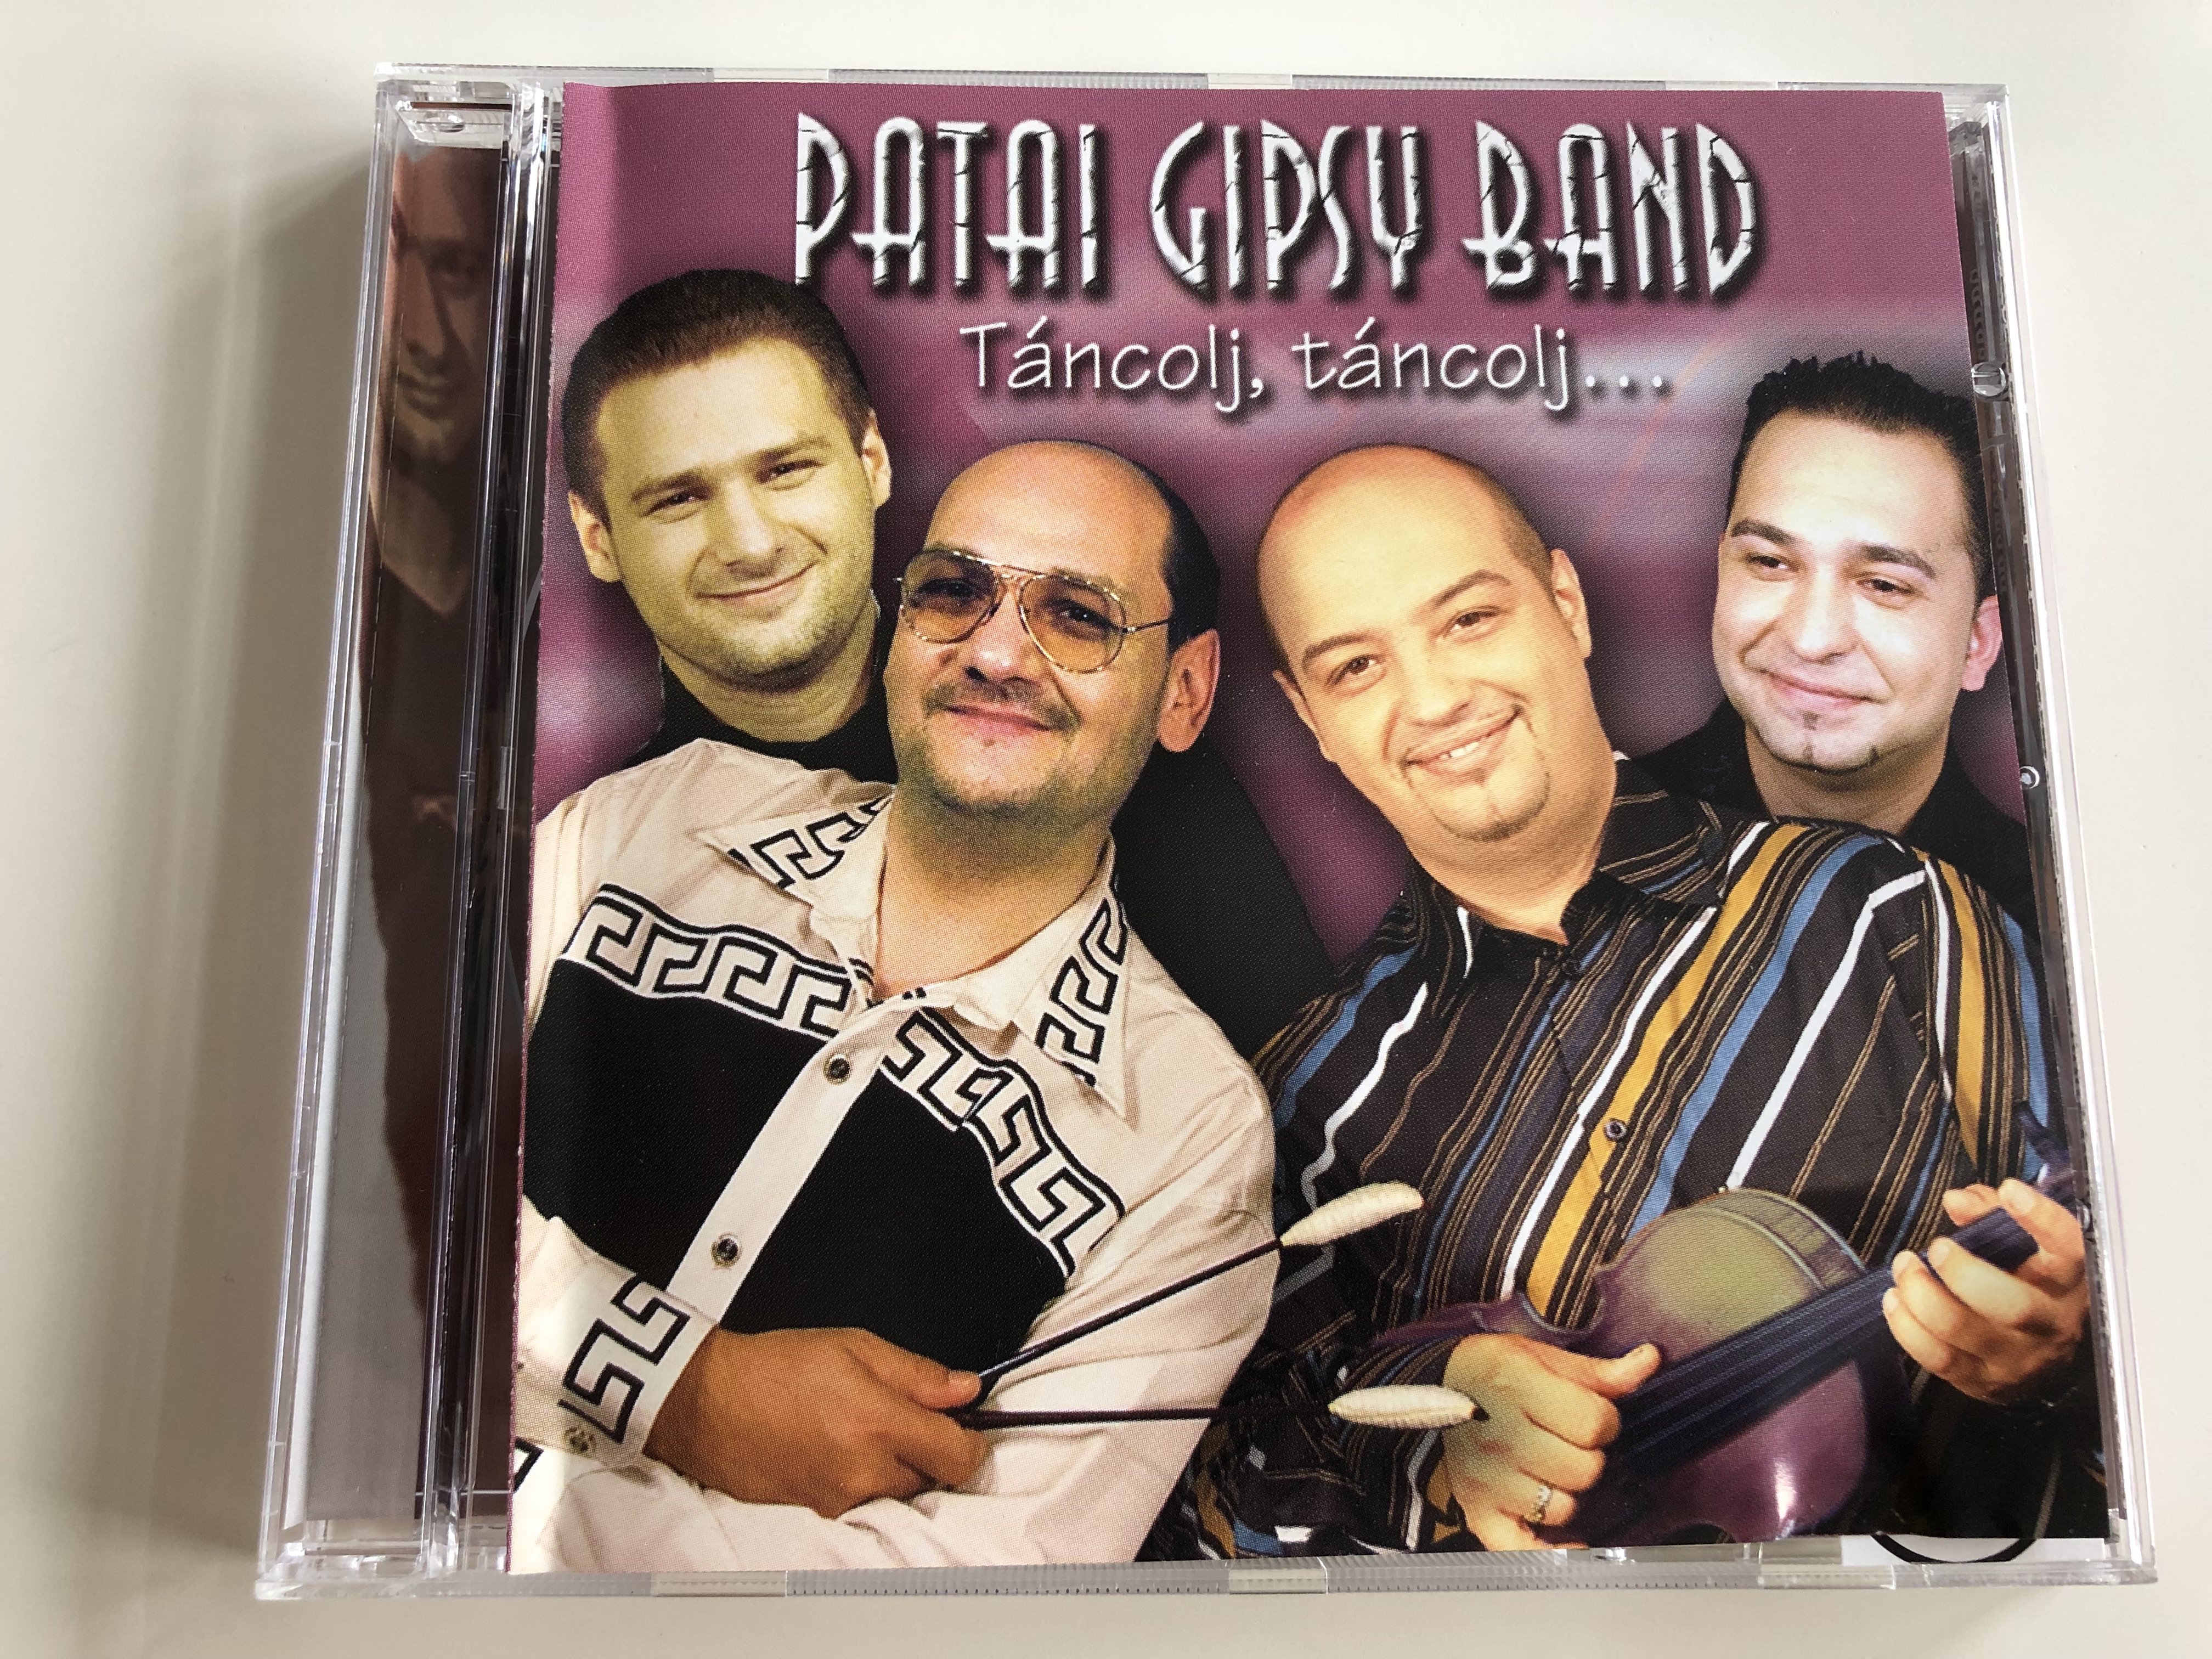 patai-gypsy-band-t-ncolj-t-ncolj-audio-cd-2004-proton-pr-cd-8810462-2-1-.jpg